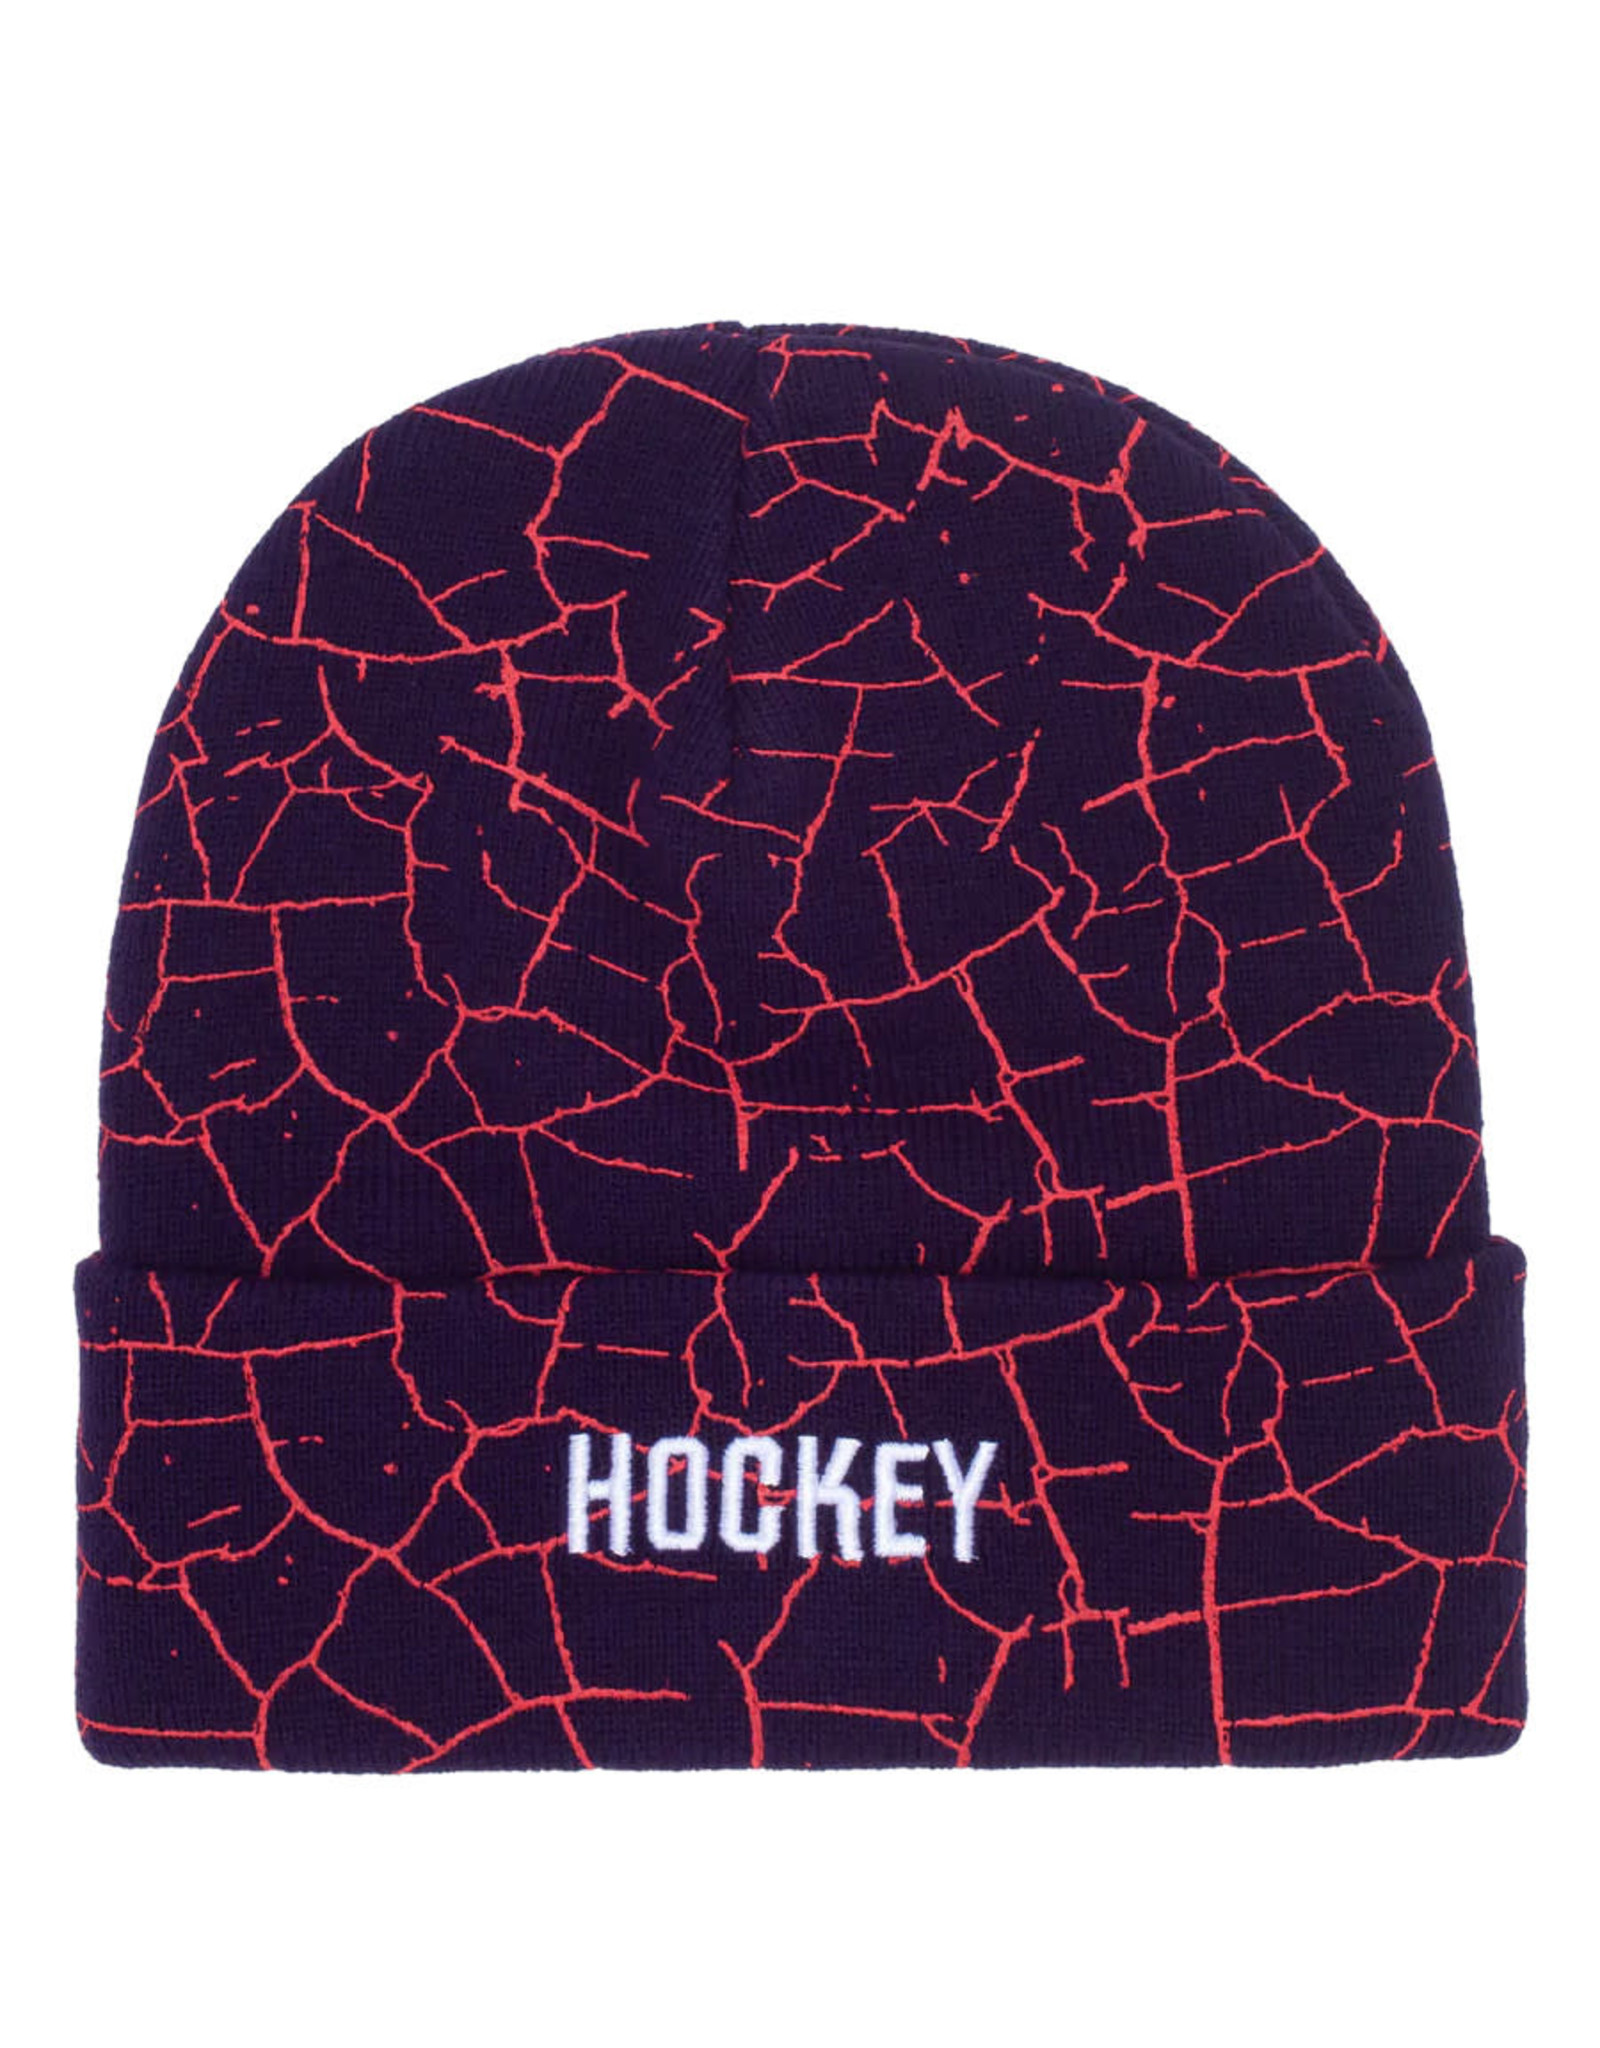 Hockey Hockey Beanie Crackle Cuff (Purple Midnight/Red)